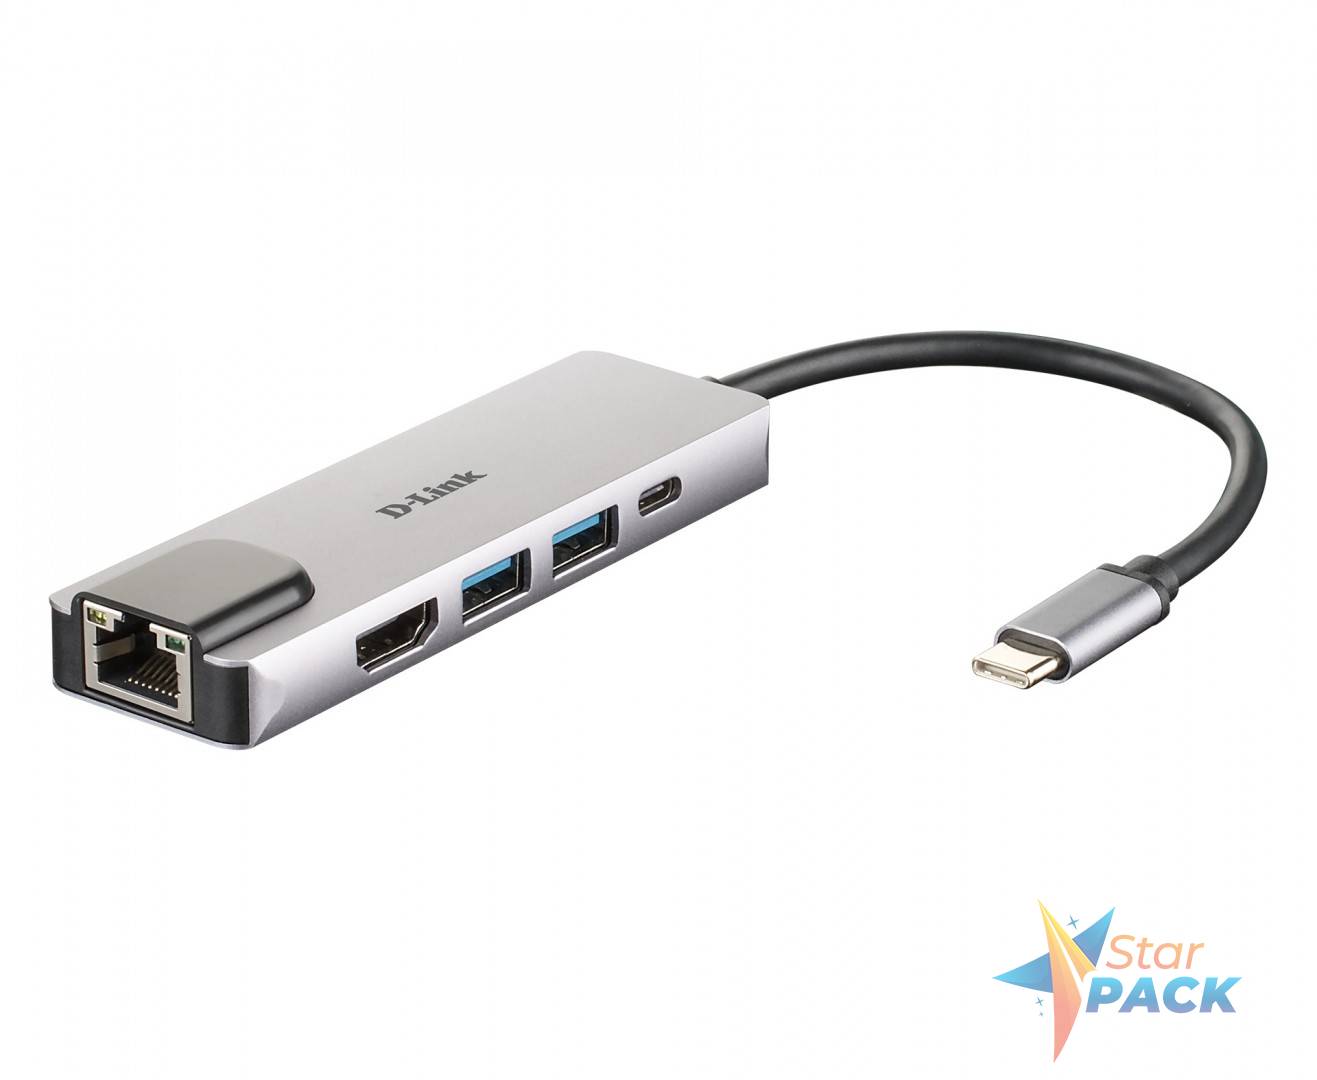 HUB extern D-LINK, porturi Gigabit LAN x 1, USB 3.0 x 2, HDMI x 1,  USB Type C x 1, conectare prin USB Type C, cablu 17 cm, argintiu